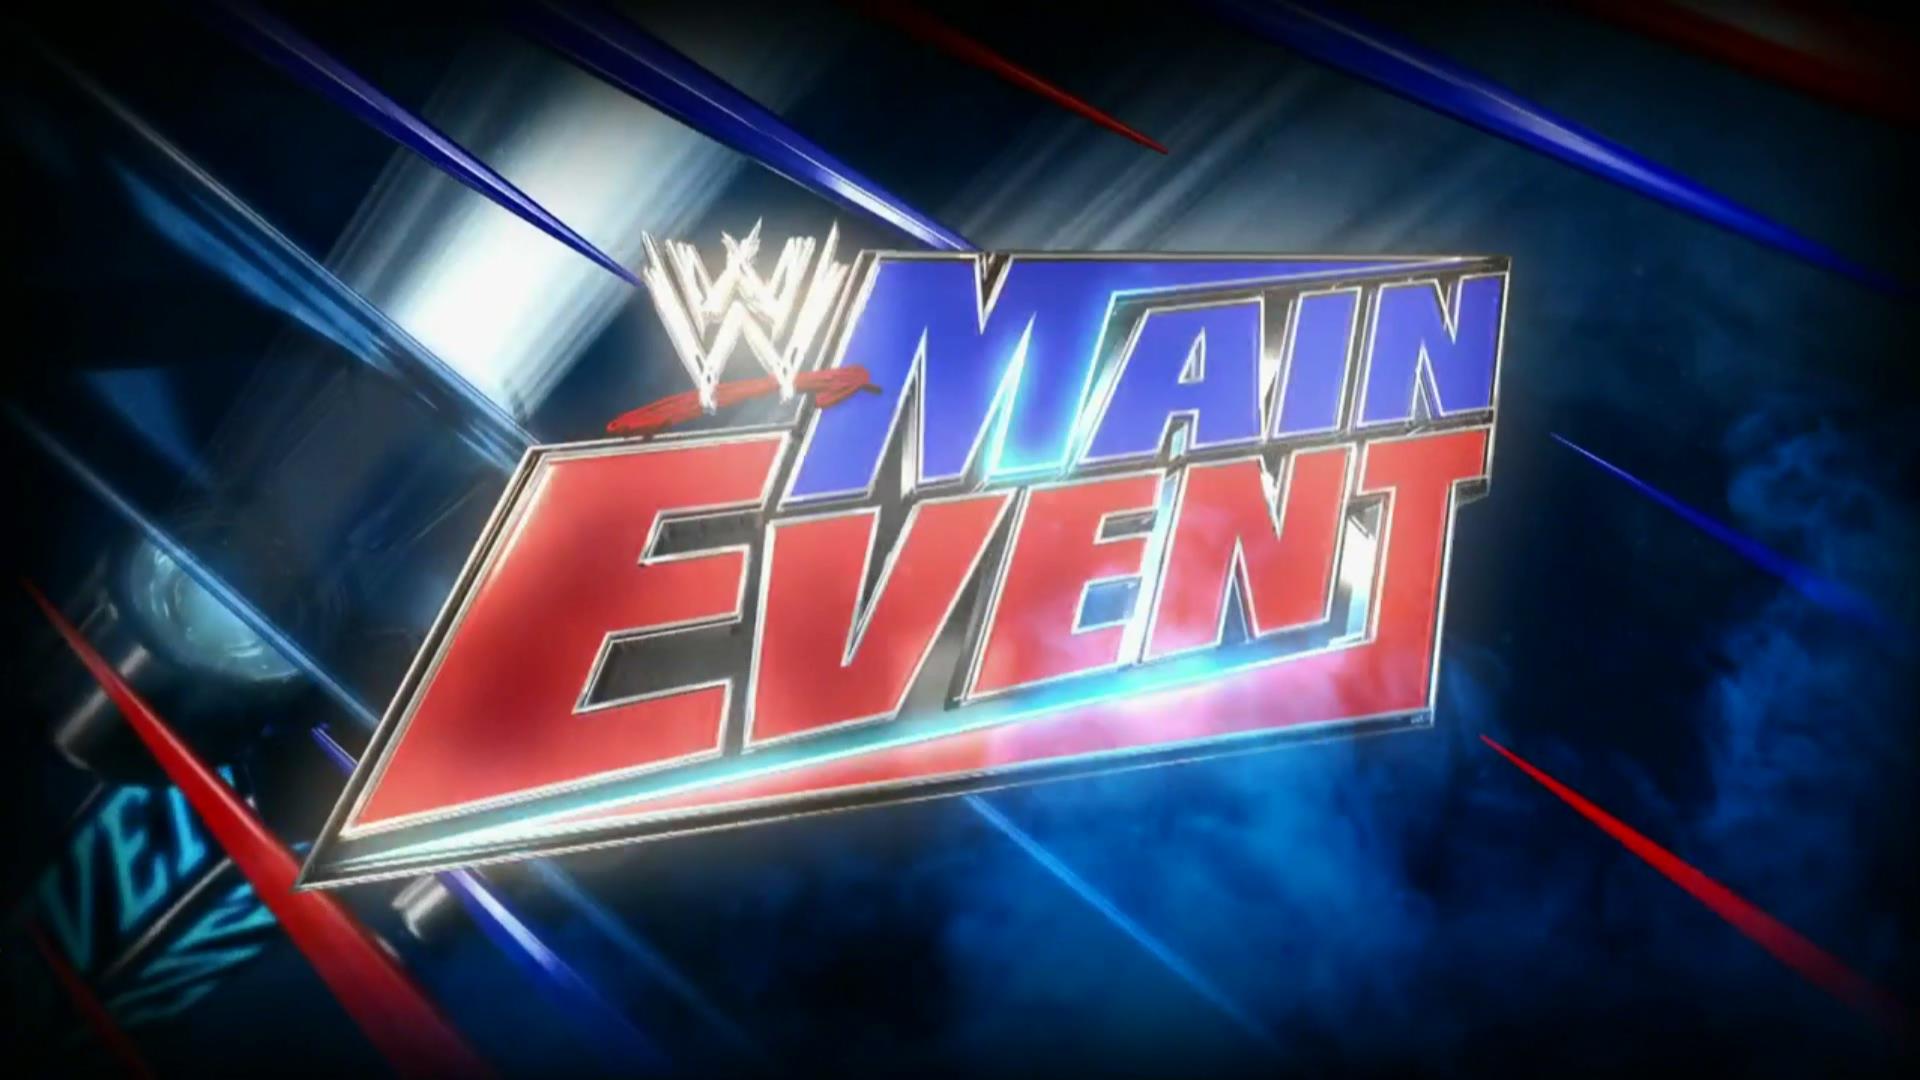 WWE Main Event Wallpaper. WWE iPod Wallpaper, All WWE Wallpaper and Present WWE Logo Wallpaper